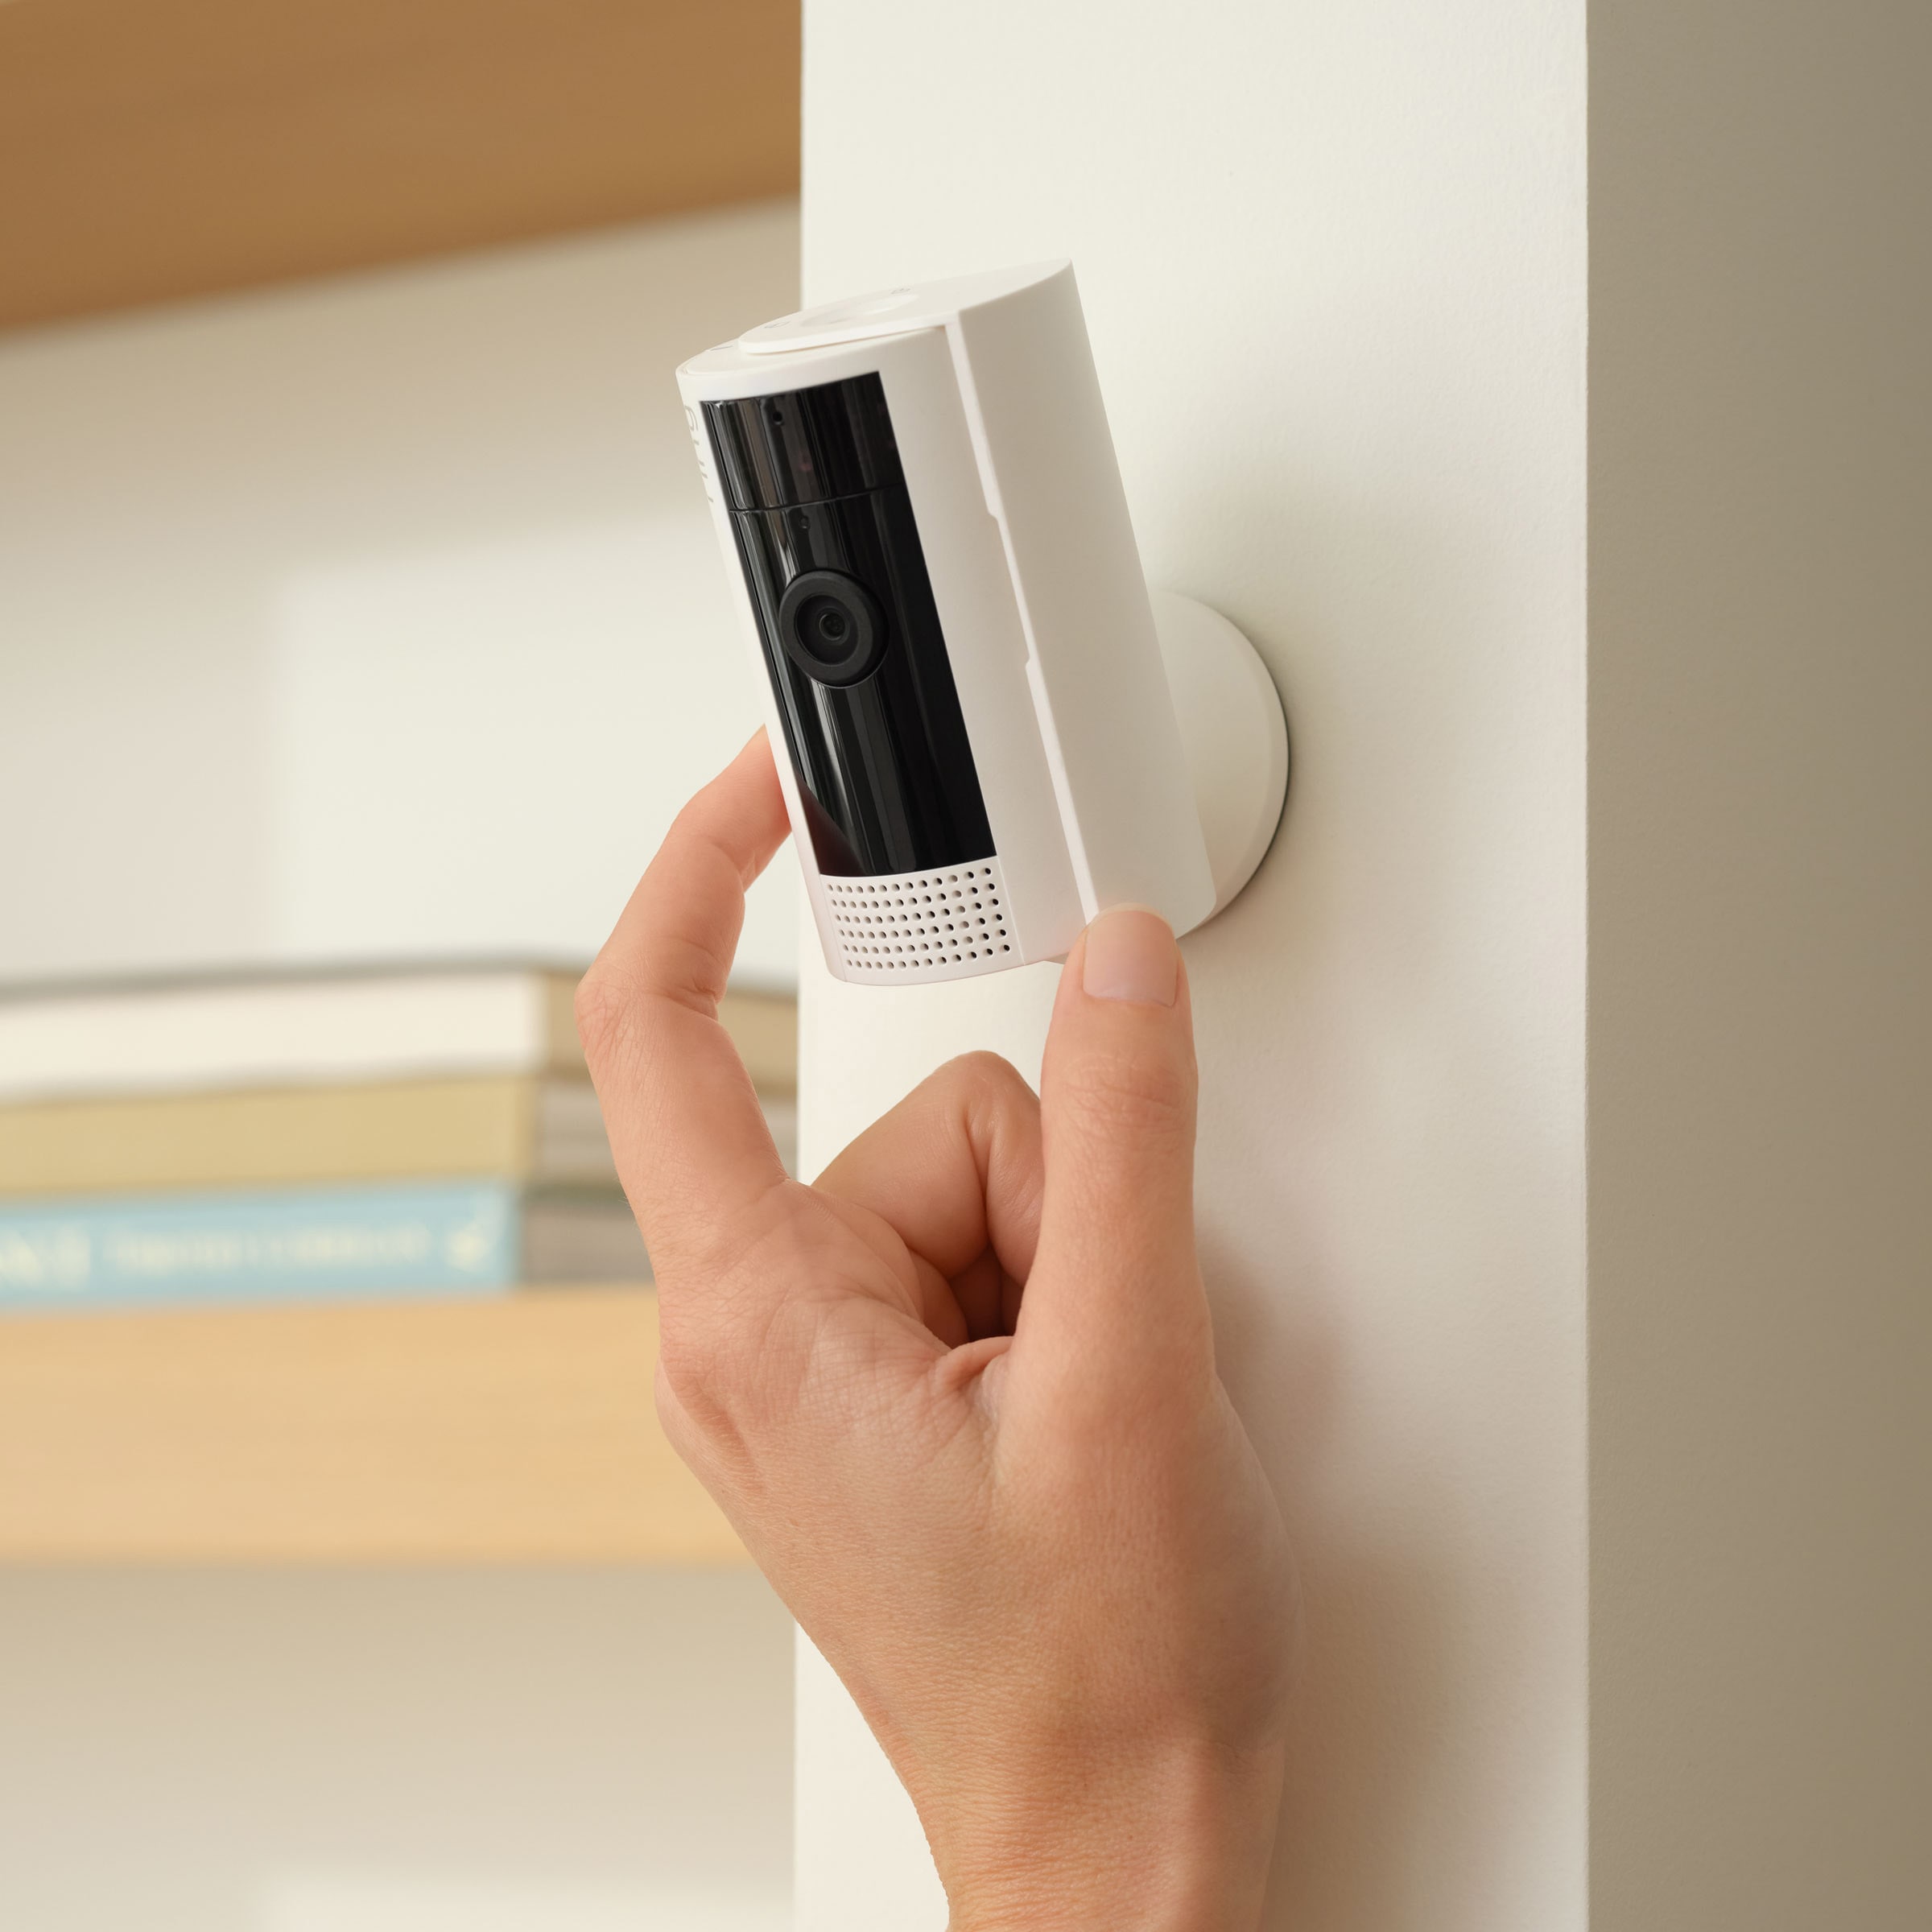 Ring Stick Up Cam Plug-In - Indoor/Outdoor Smart Security Wifi